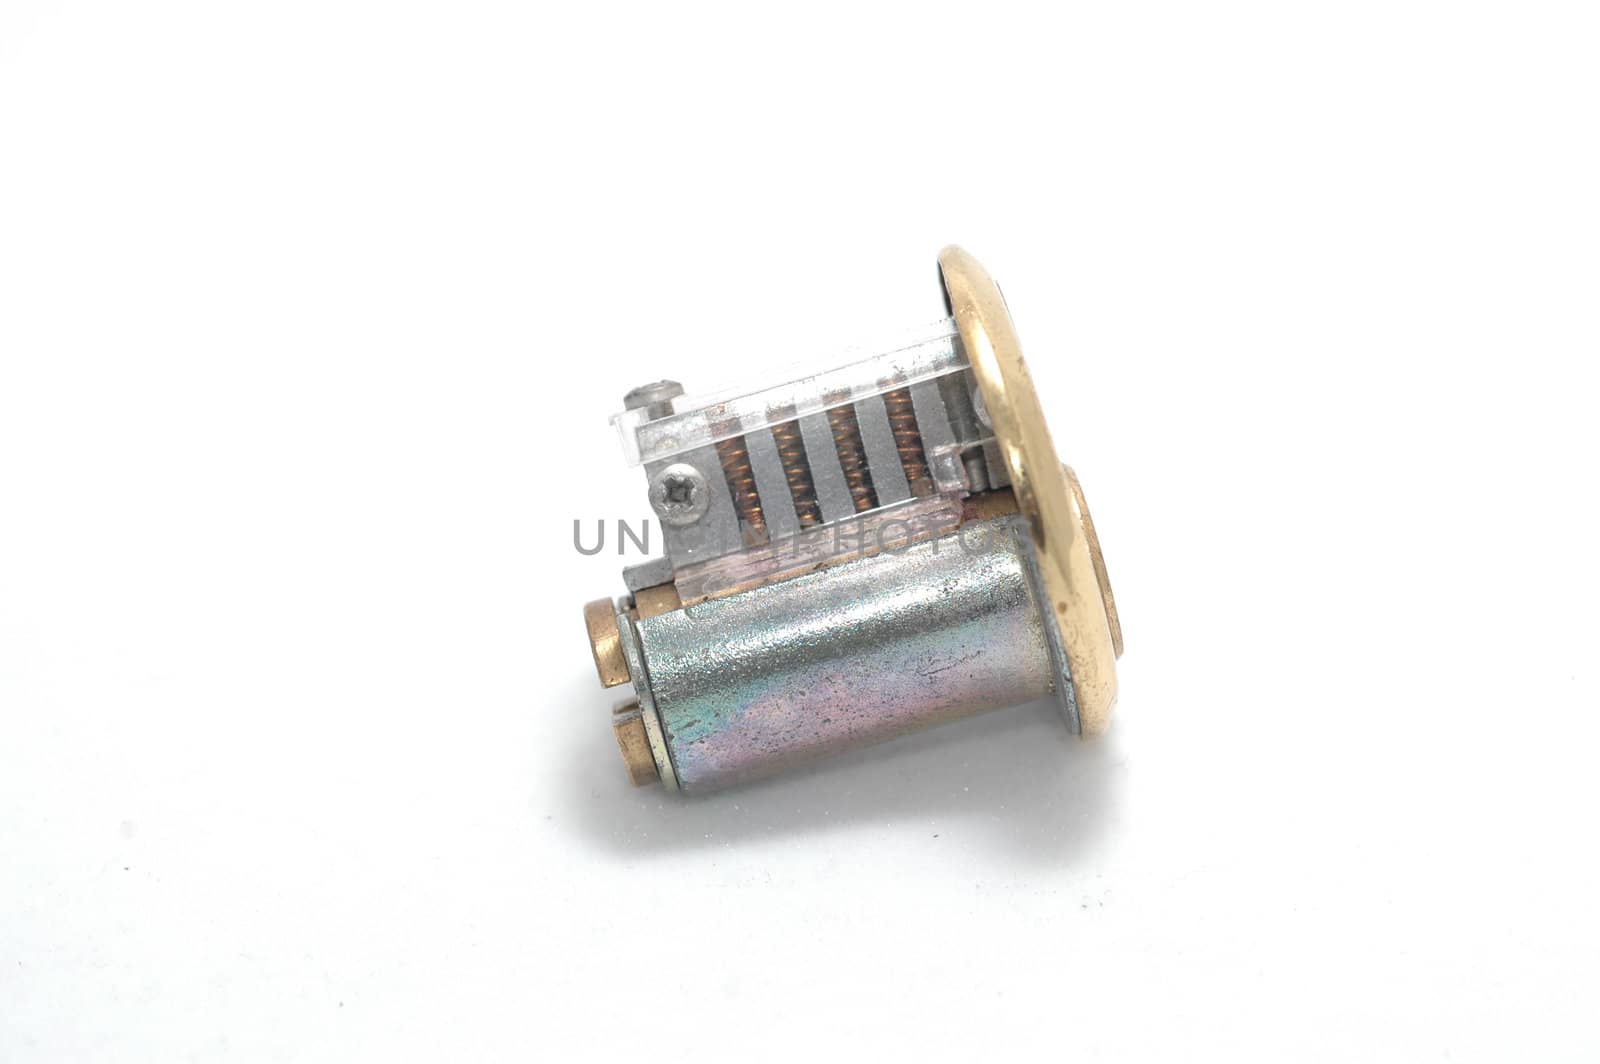 Cutaway pin-tumbler lock isolated on white